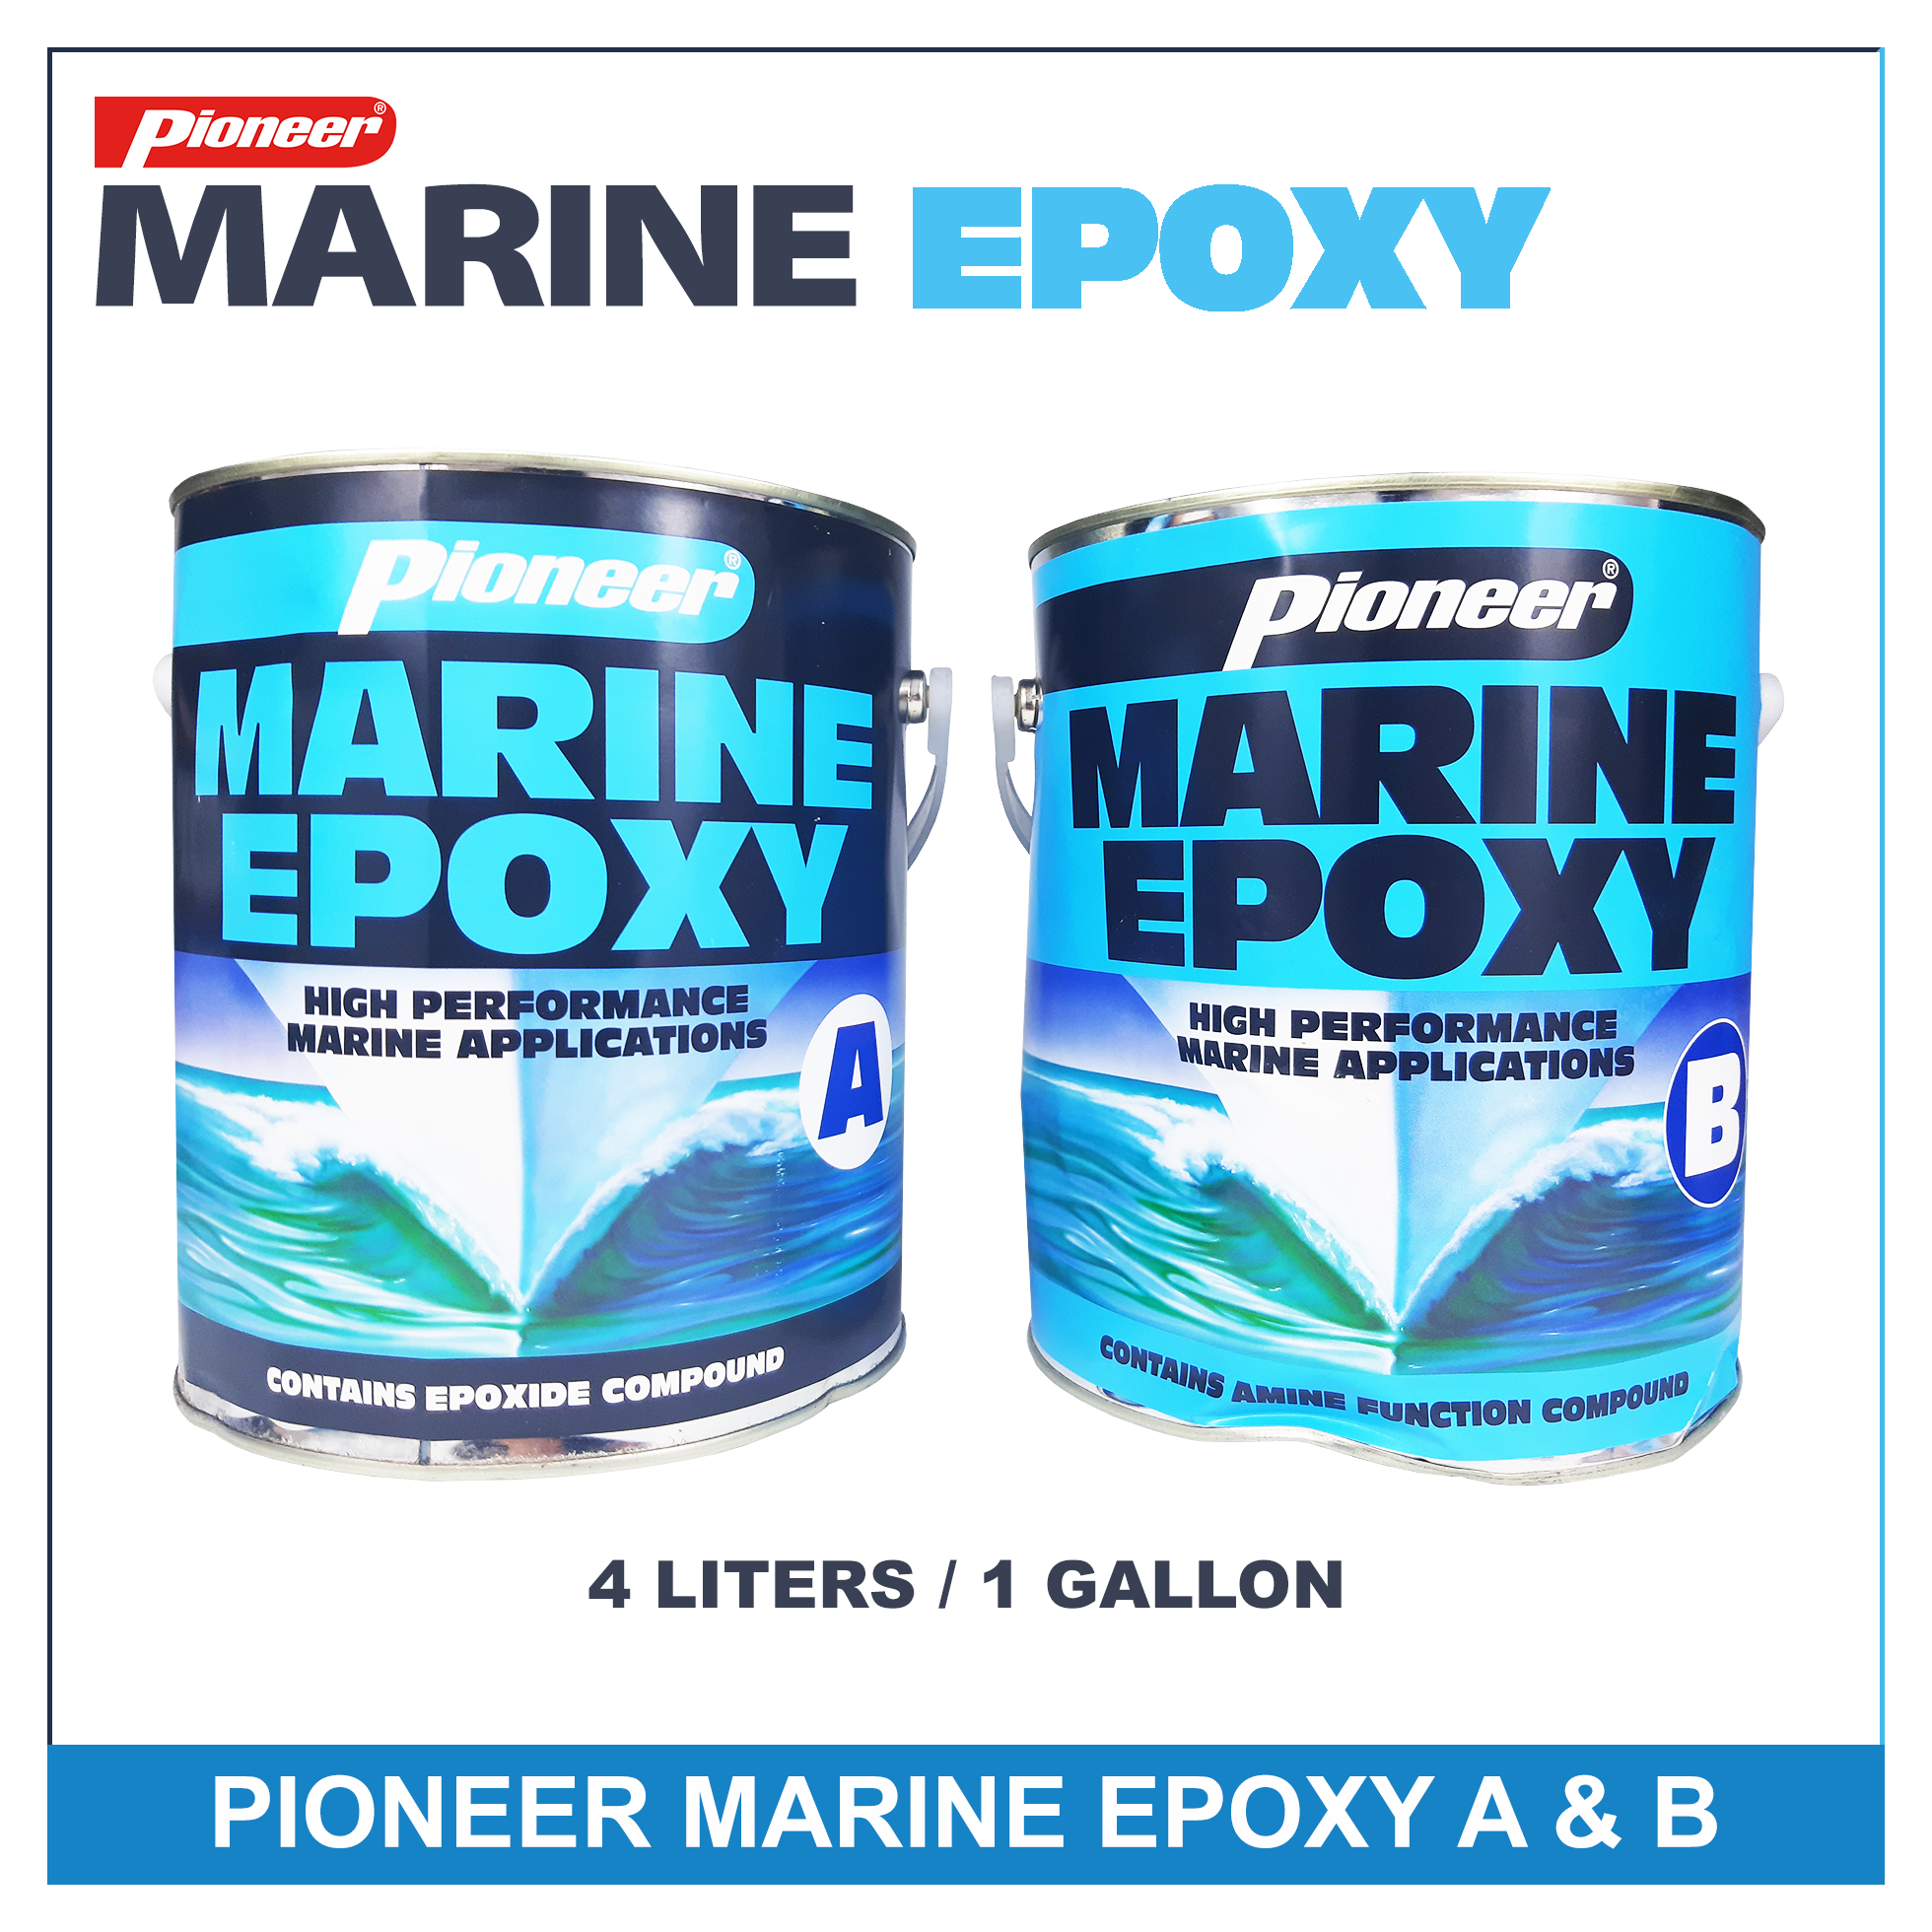 PIONEER MARINE EPOXY A & B